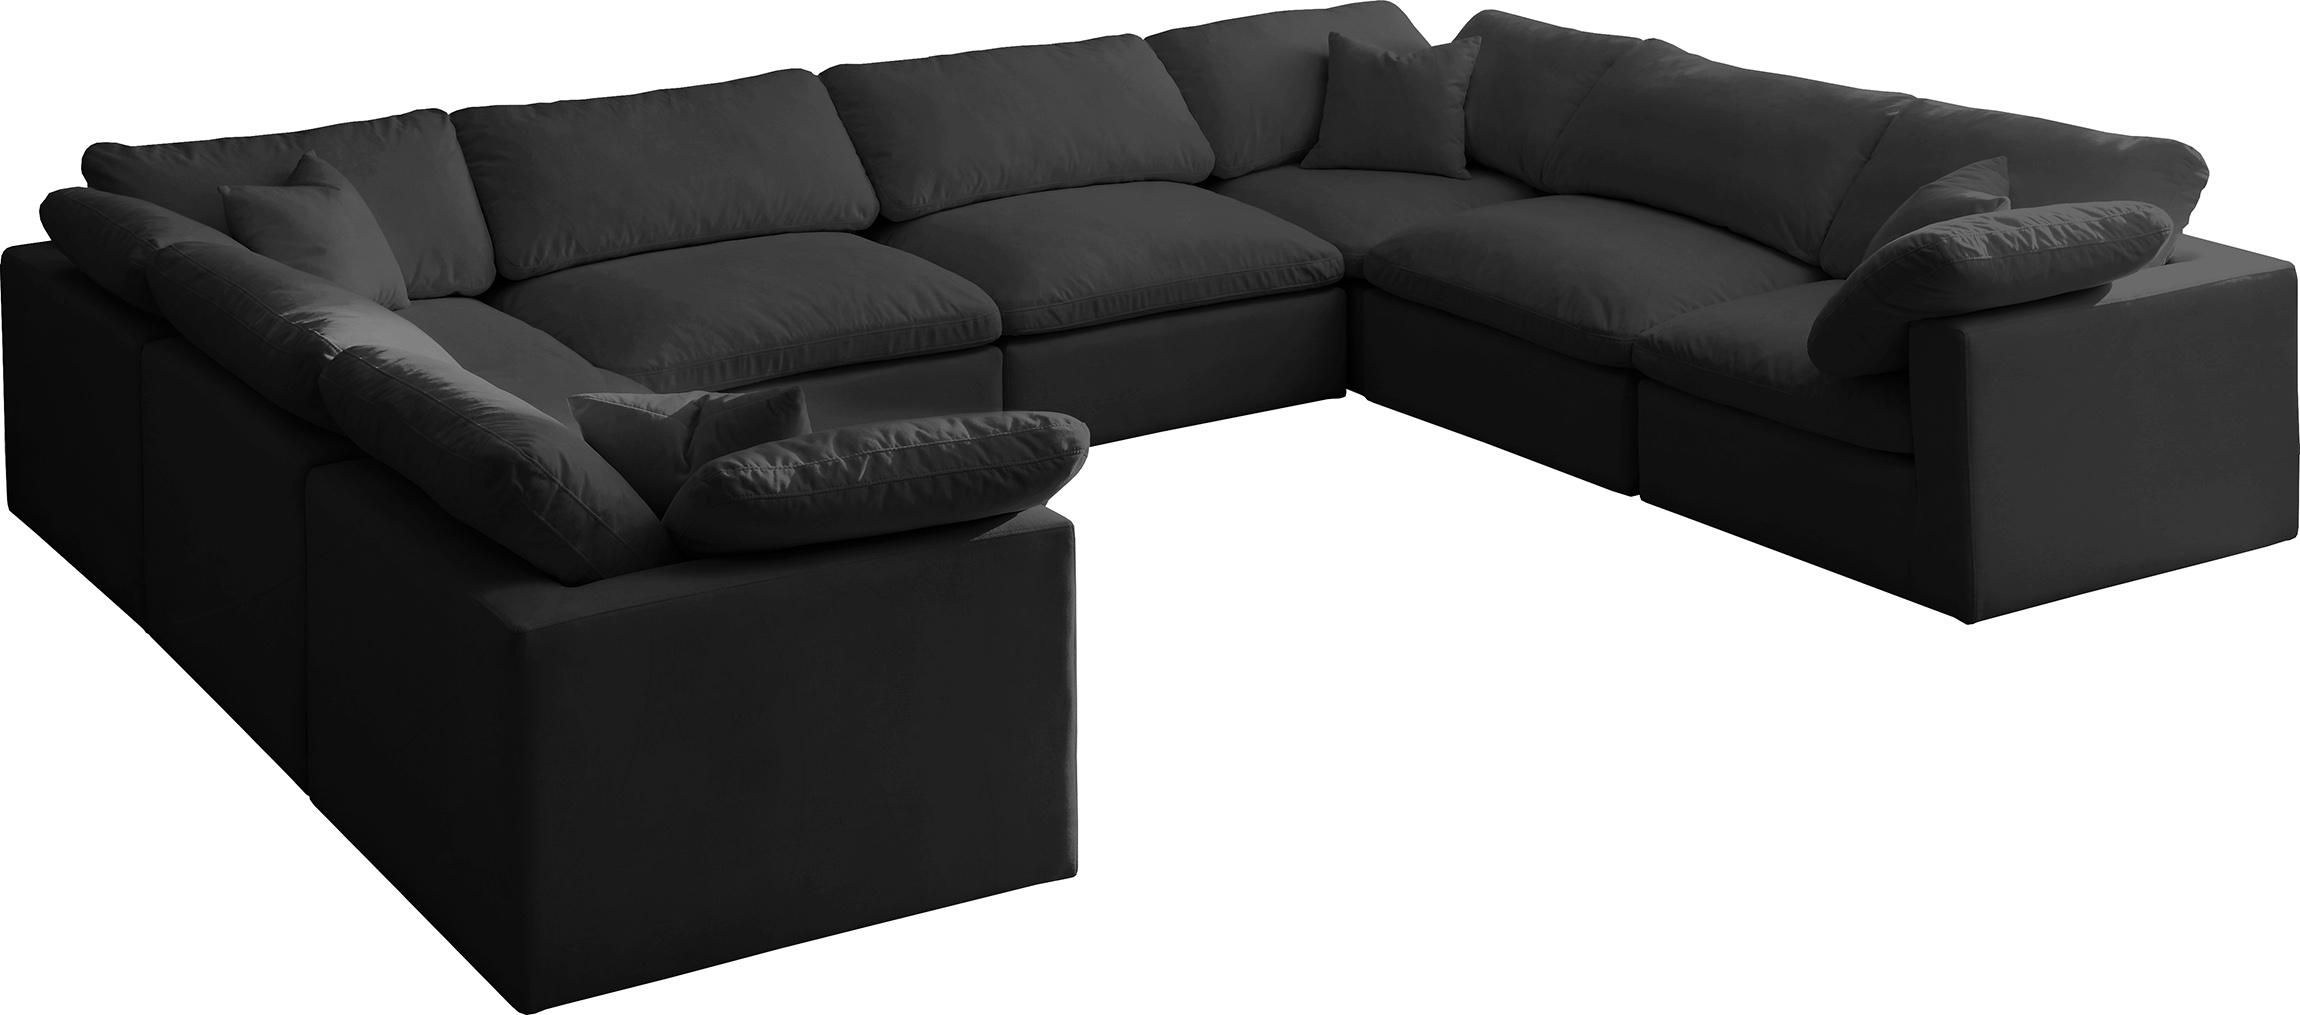 Contemporary, Modern Modular Sectional Sofa 602Black-Sec8A 602Black-Sec8A in Black Fabric